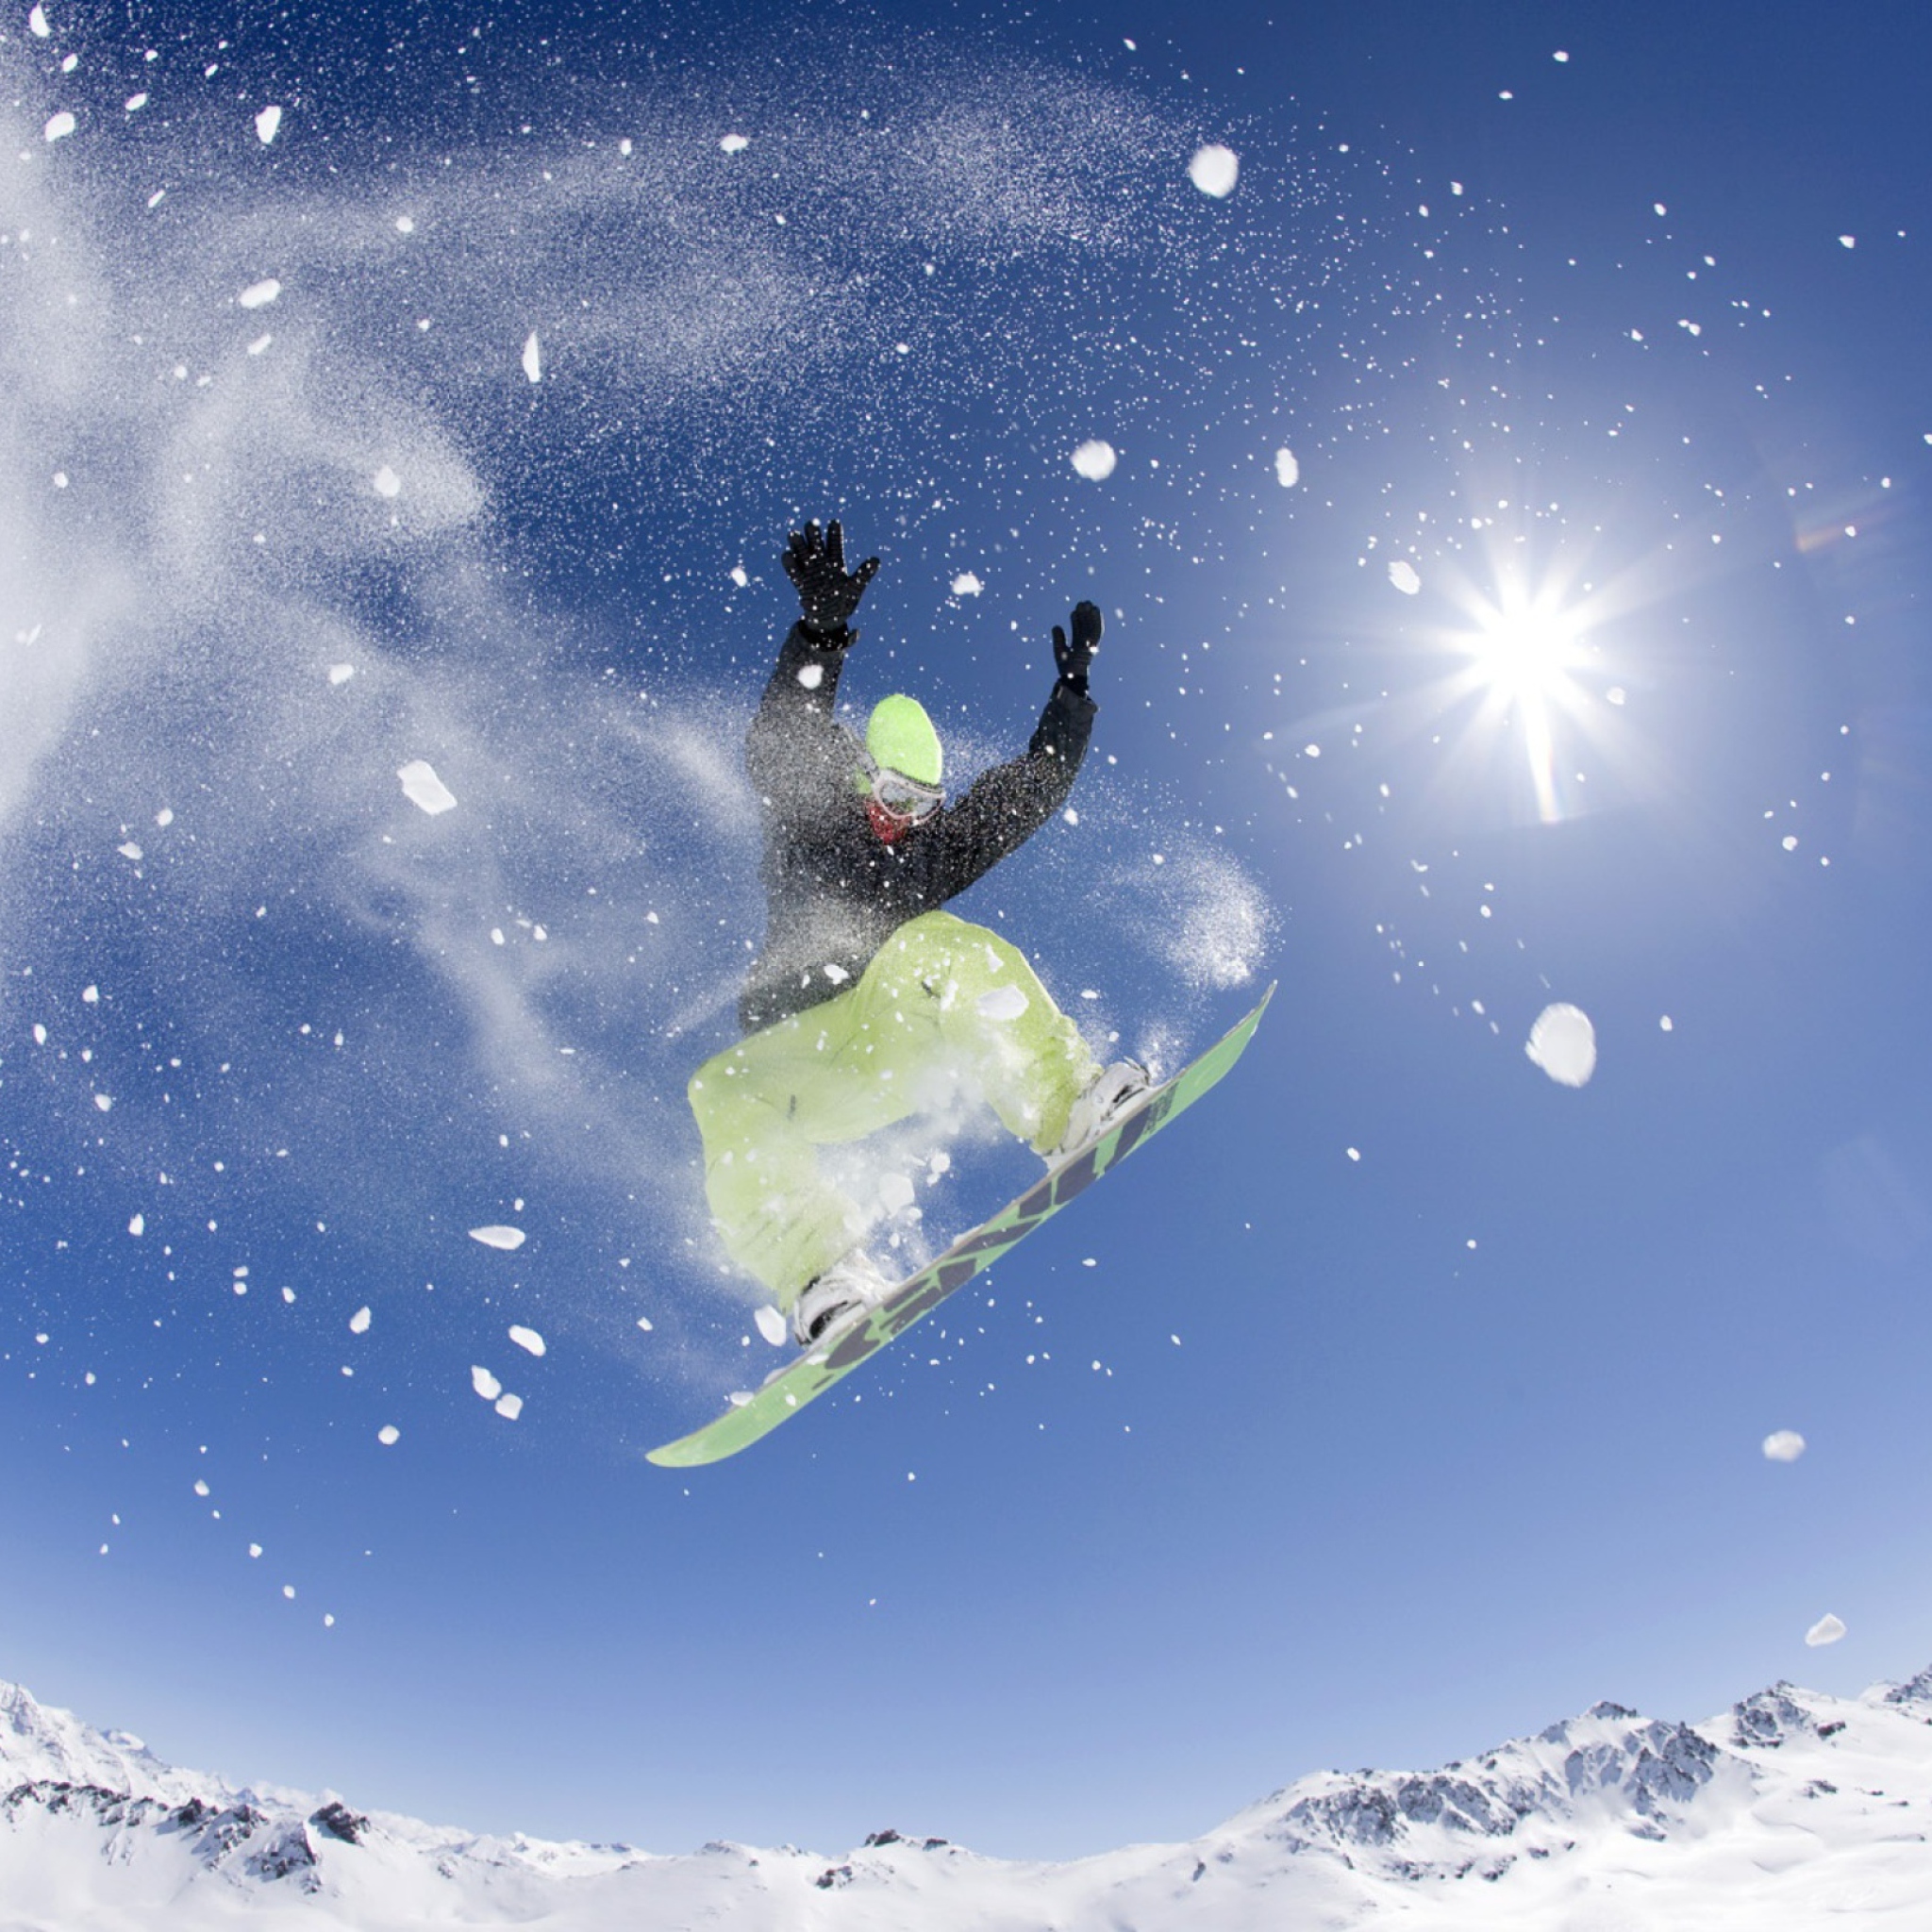 Snowboarding wallpaper 2048x2048